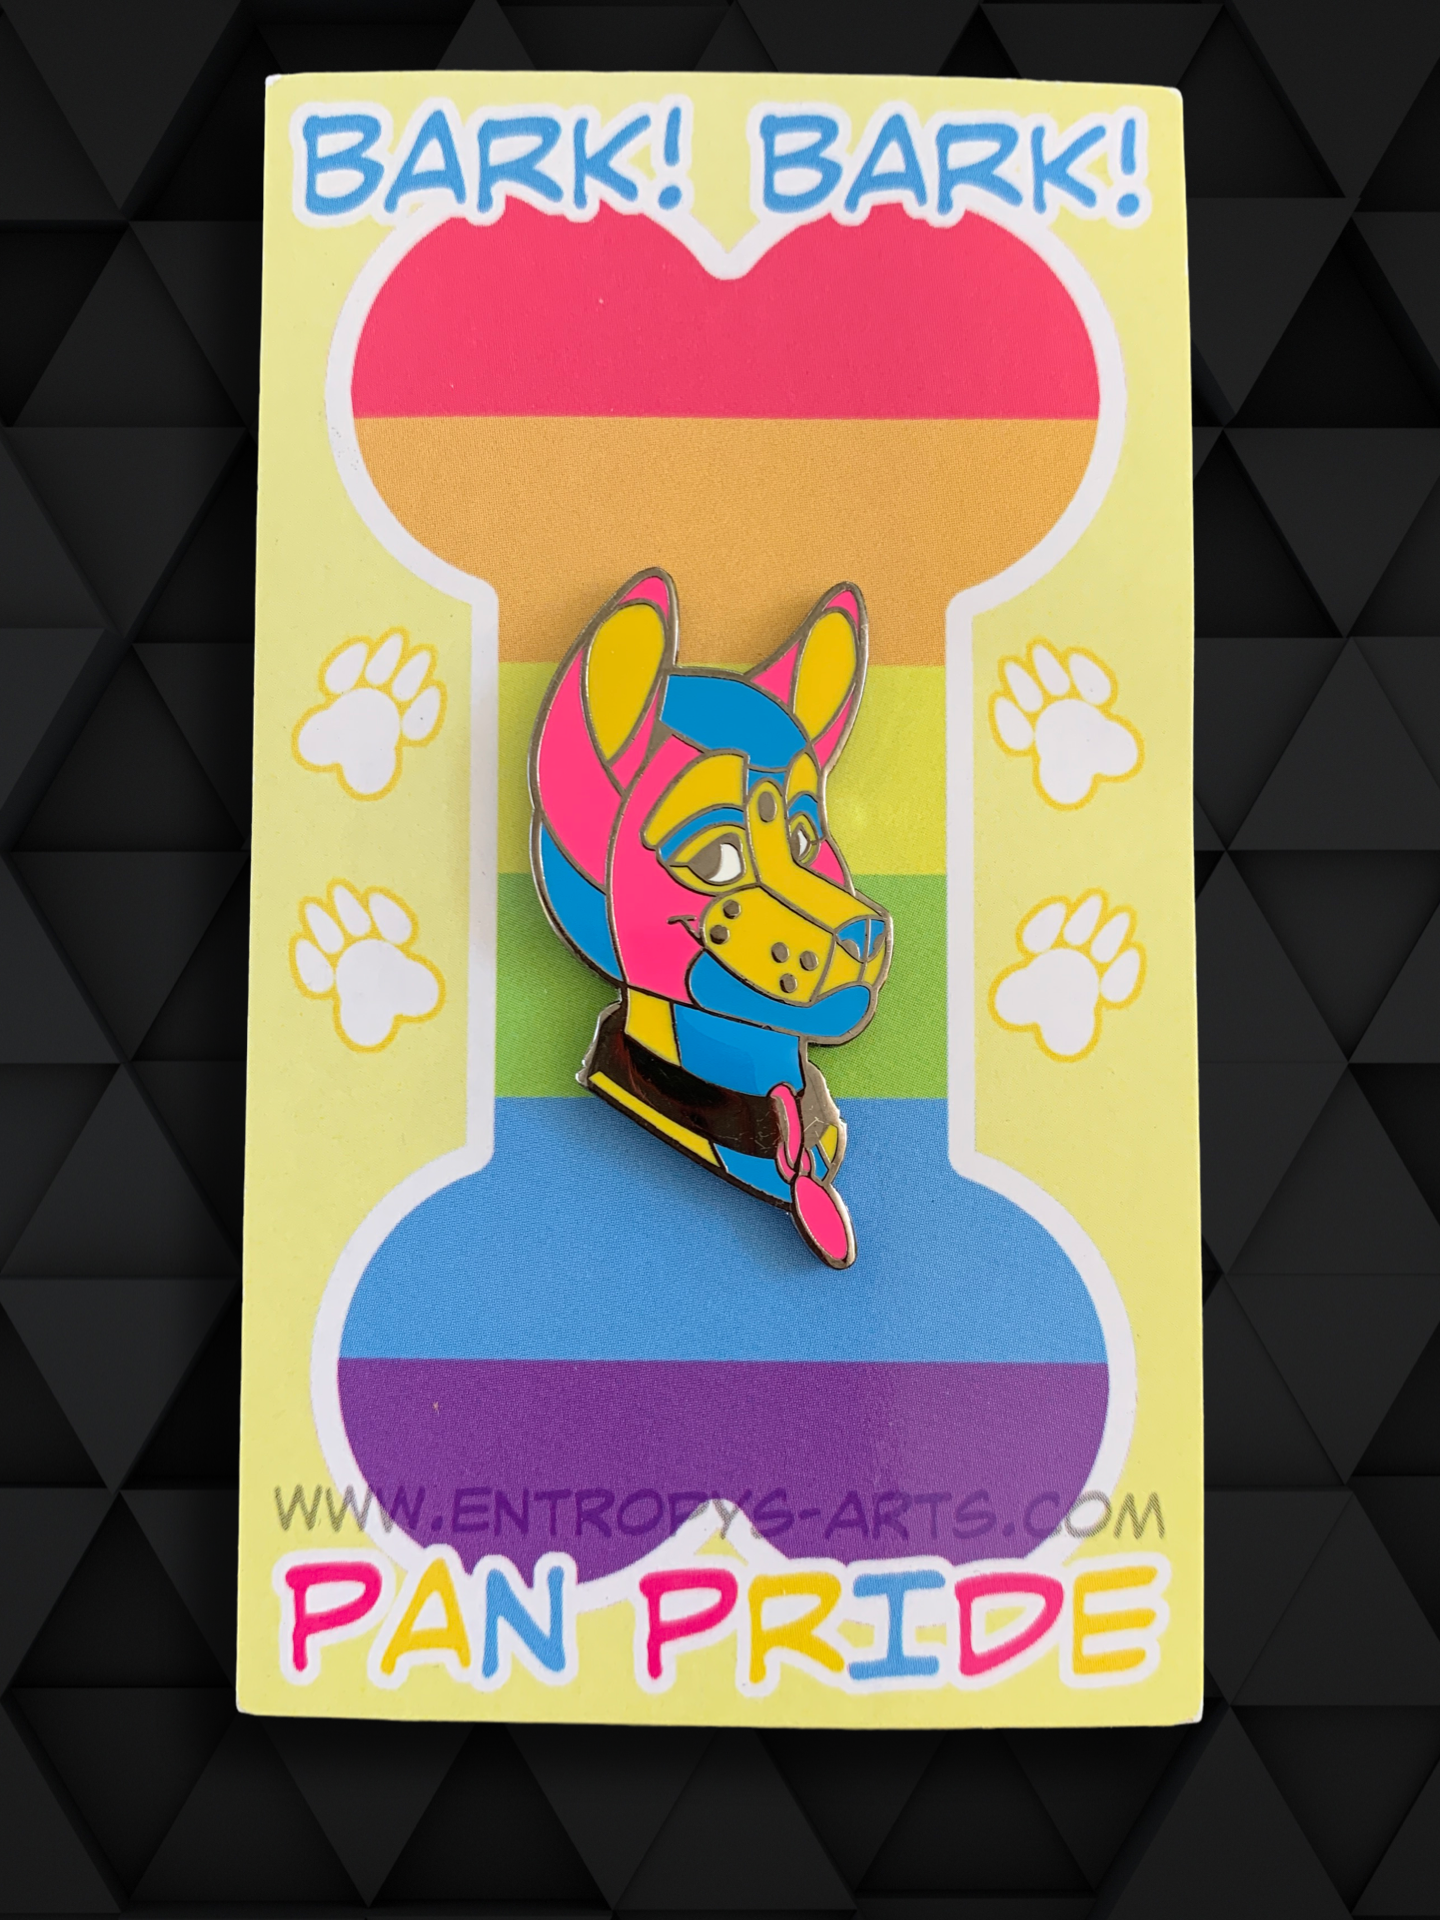 Pup Pride Enamel Pin